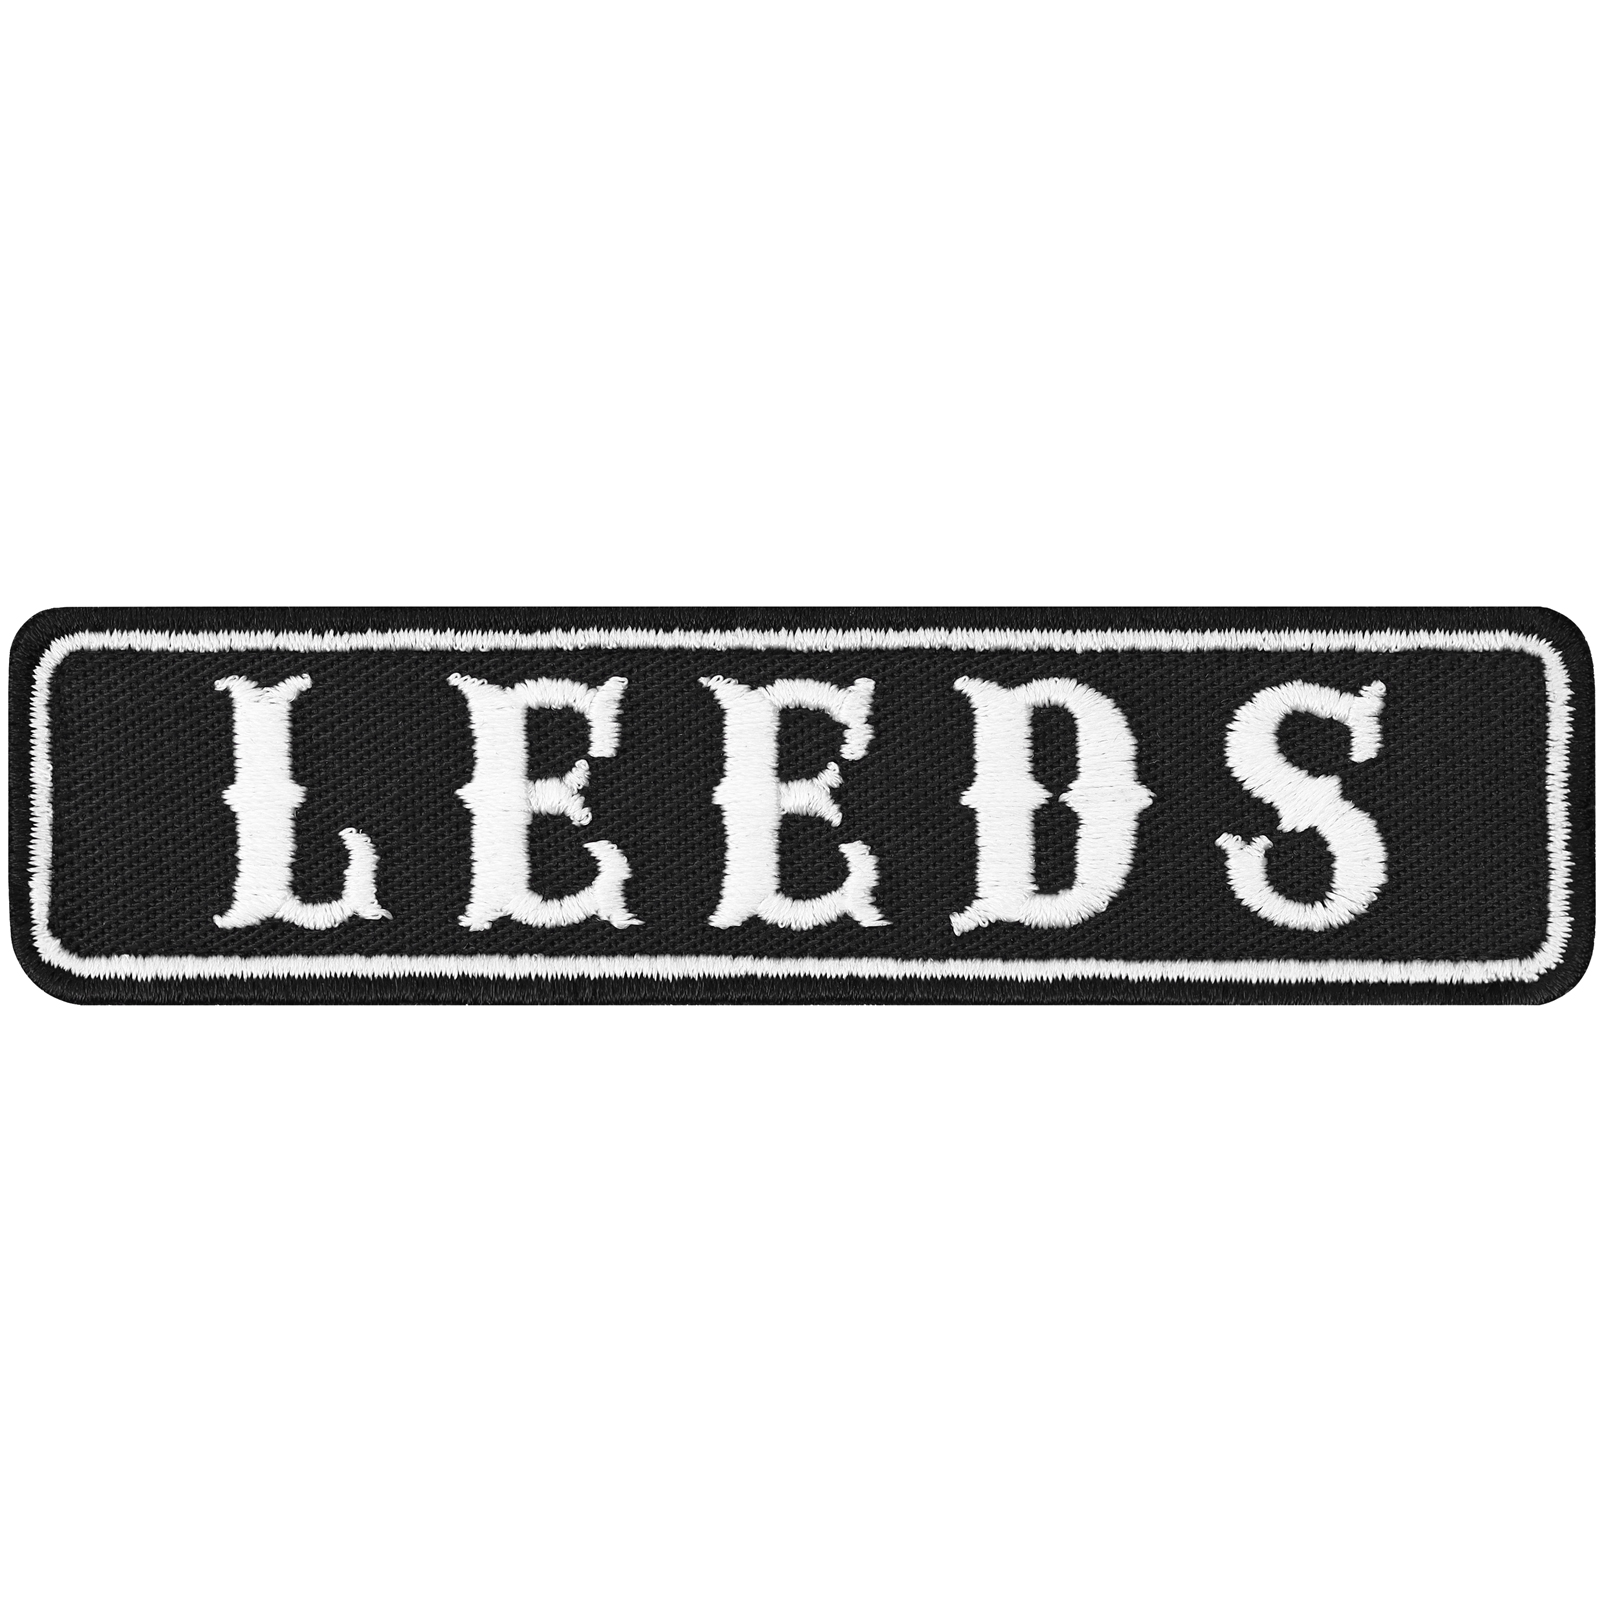 Leeds - Patch